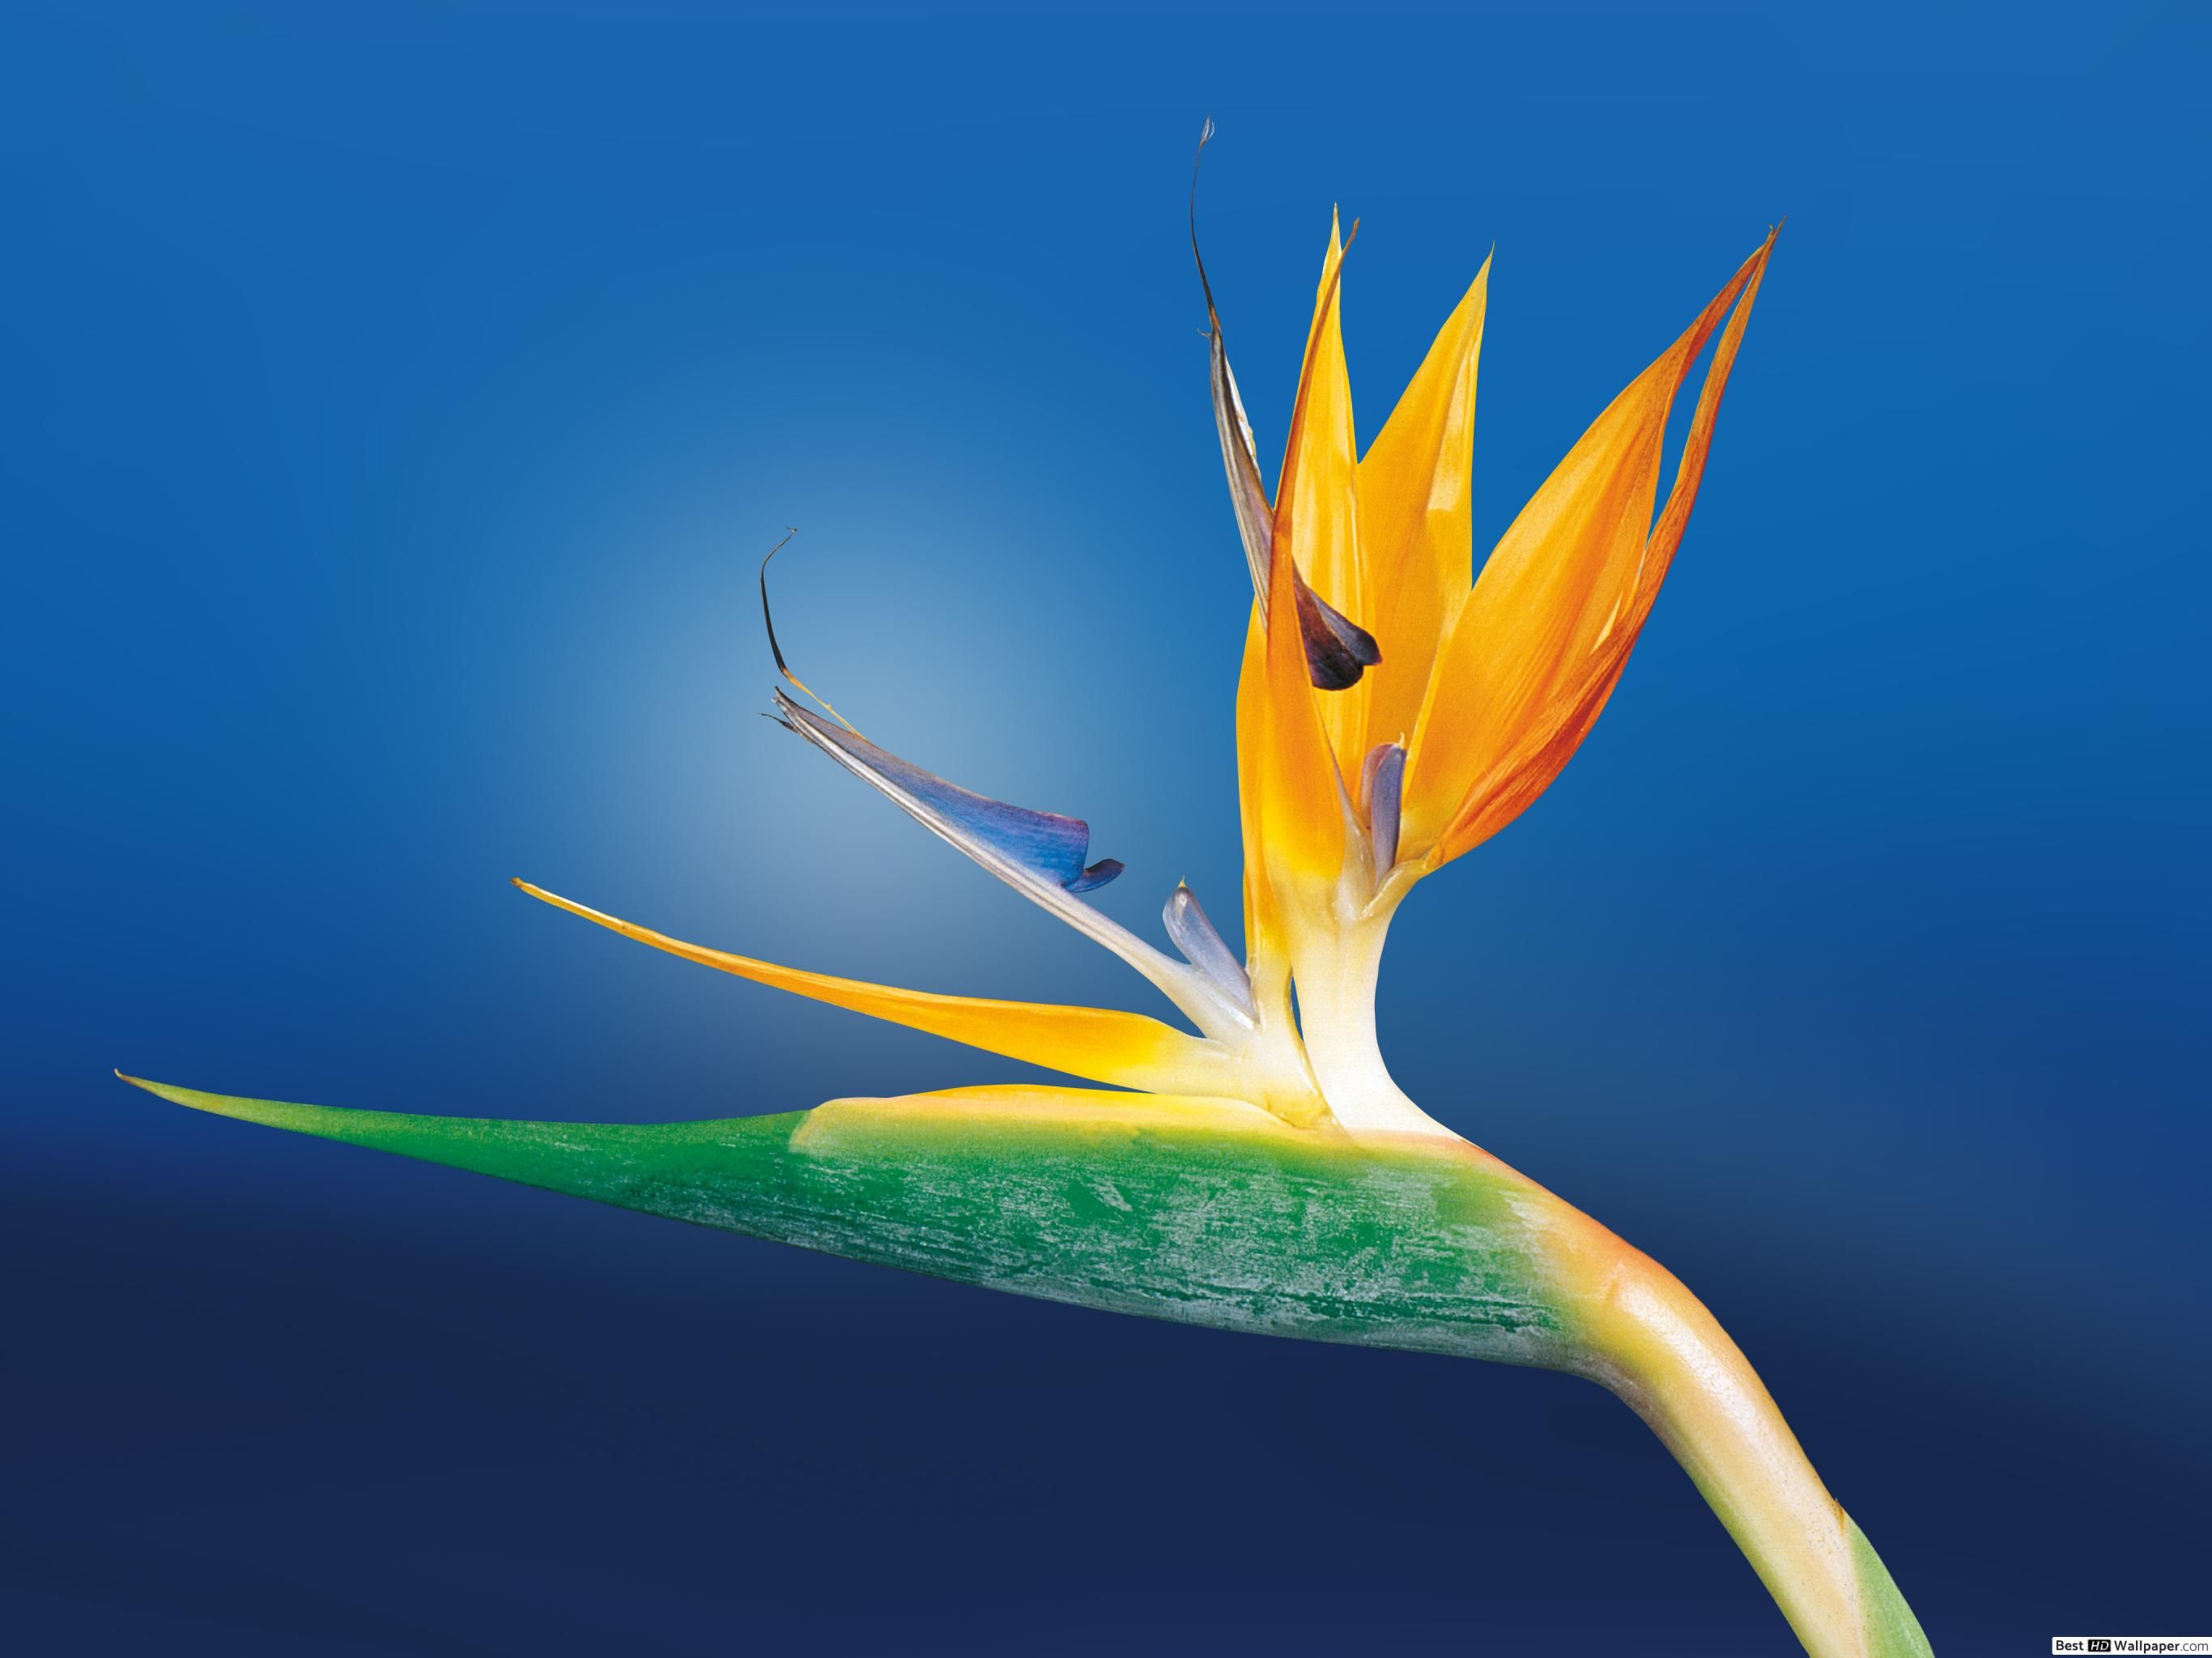 Caudata flower bird of paradise HD wallpaper download